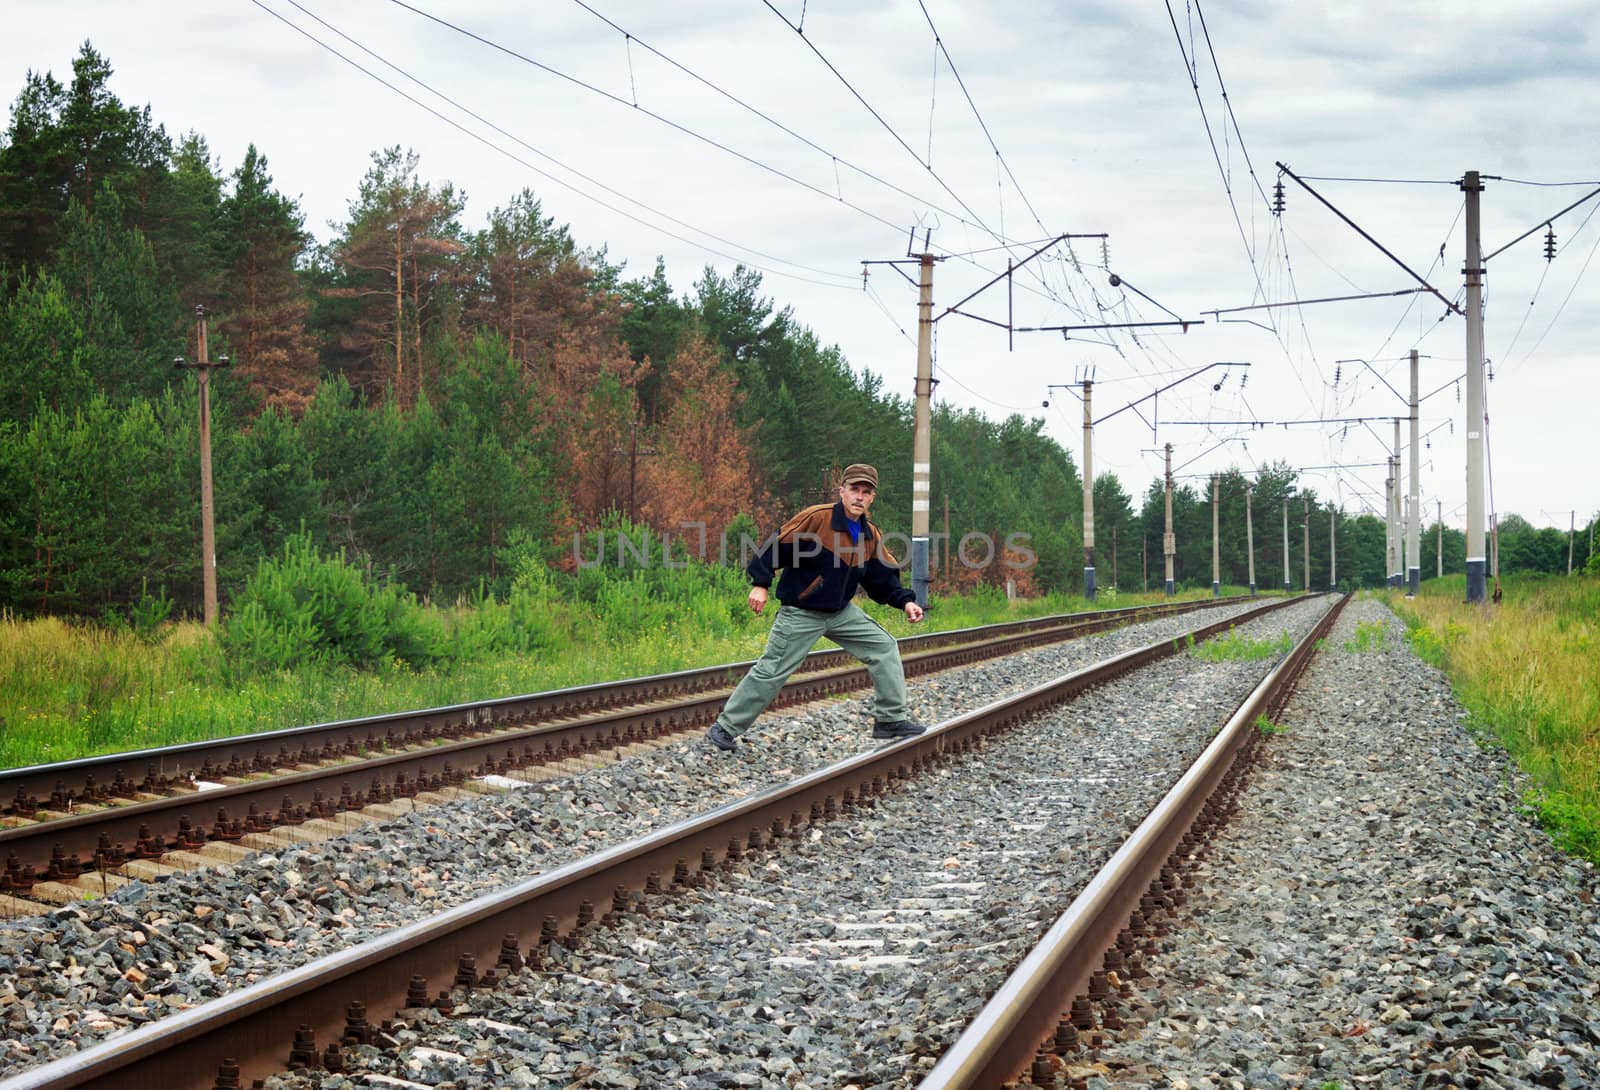 An elderly man risky crosses a railway embankment